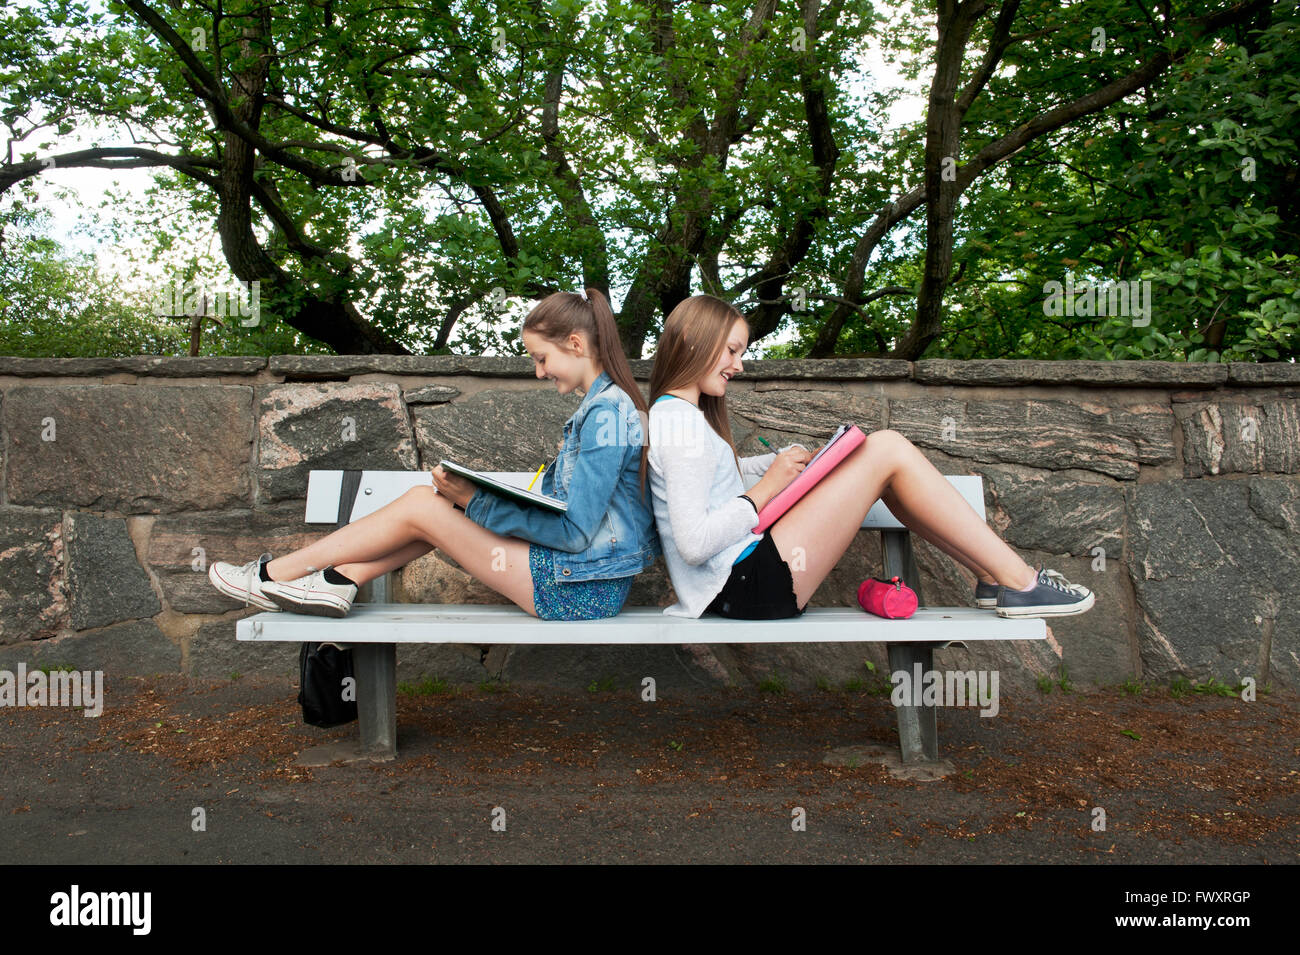 Sweden, Vastra Gotaland, Gothenburg, Two girls (14-15) sitting on bench back to back Stock Photo